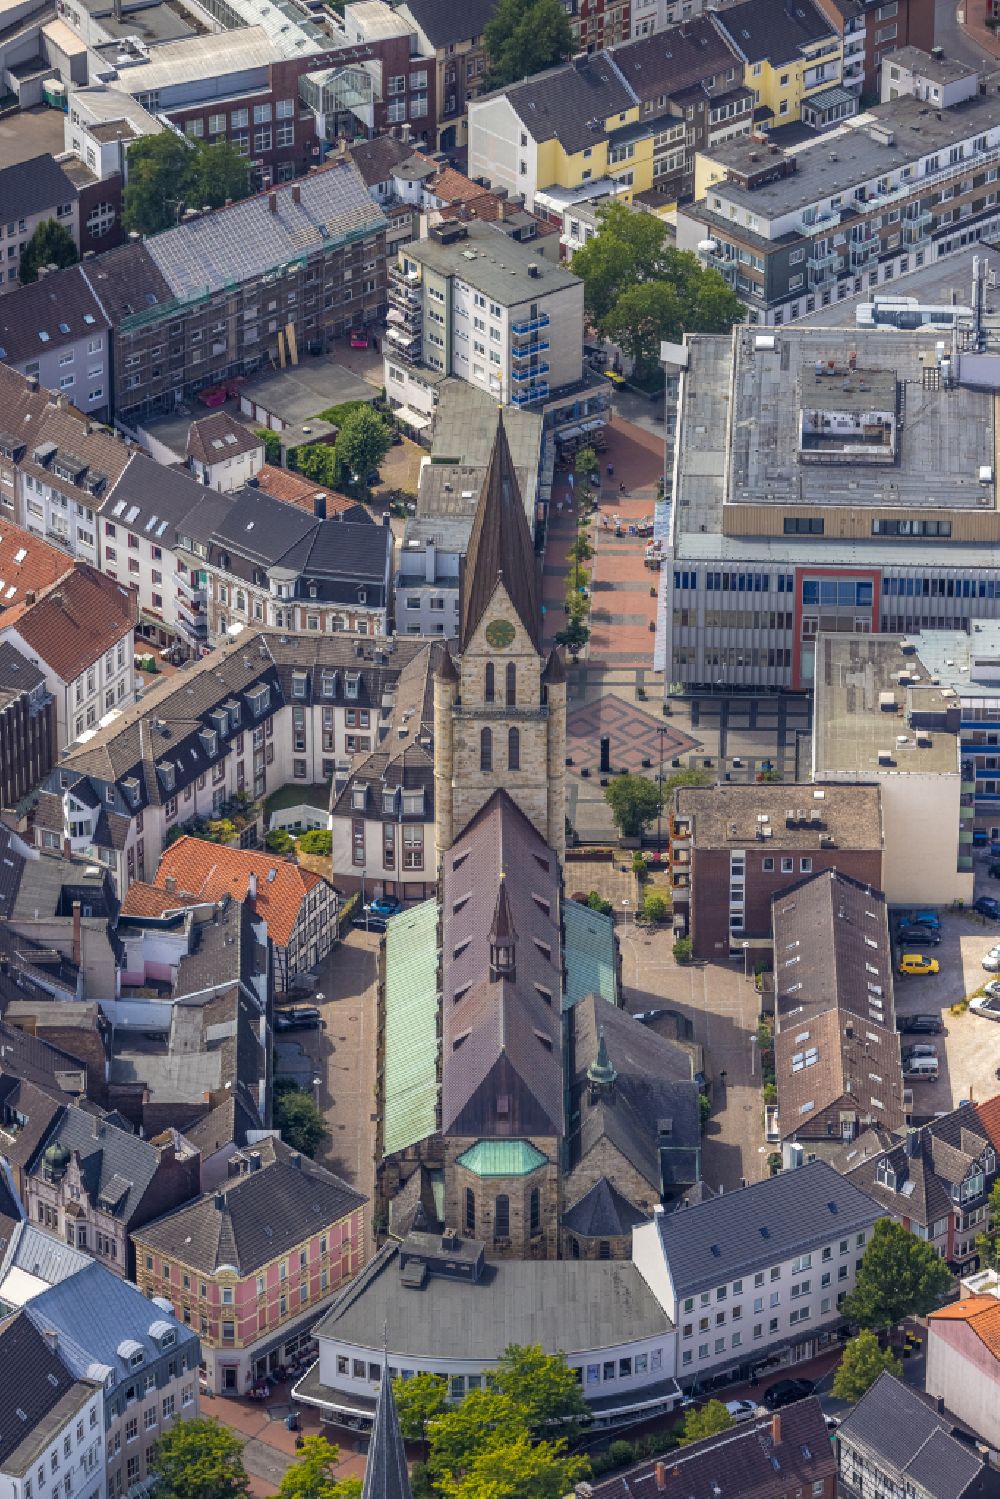 Luftbild Castrop-Rauxel - Kirchengebäude St. Lambertus in Castrop-Rauxel im Bundesland Nordrhein-Westfalen, Deutschland